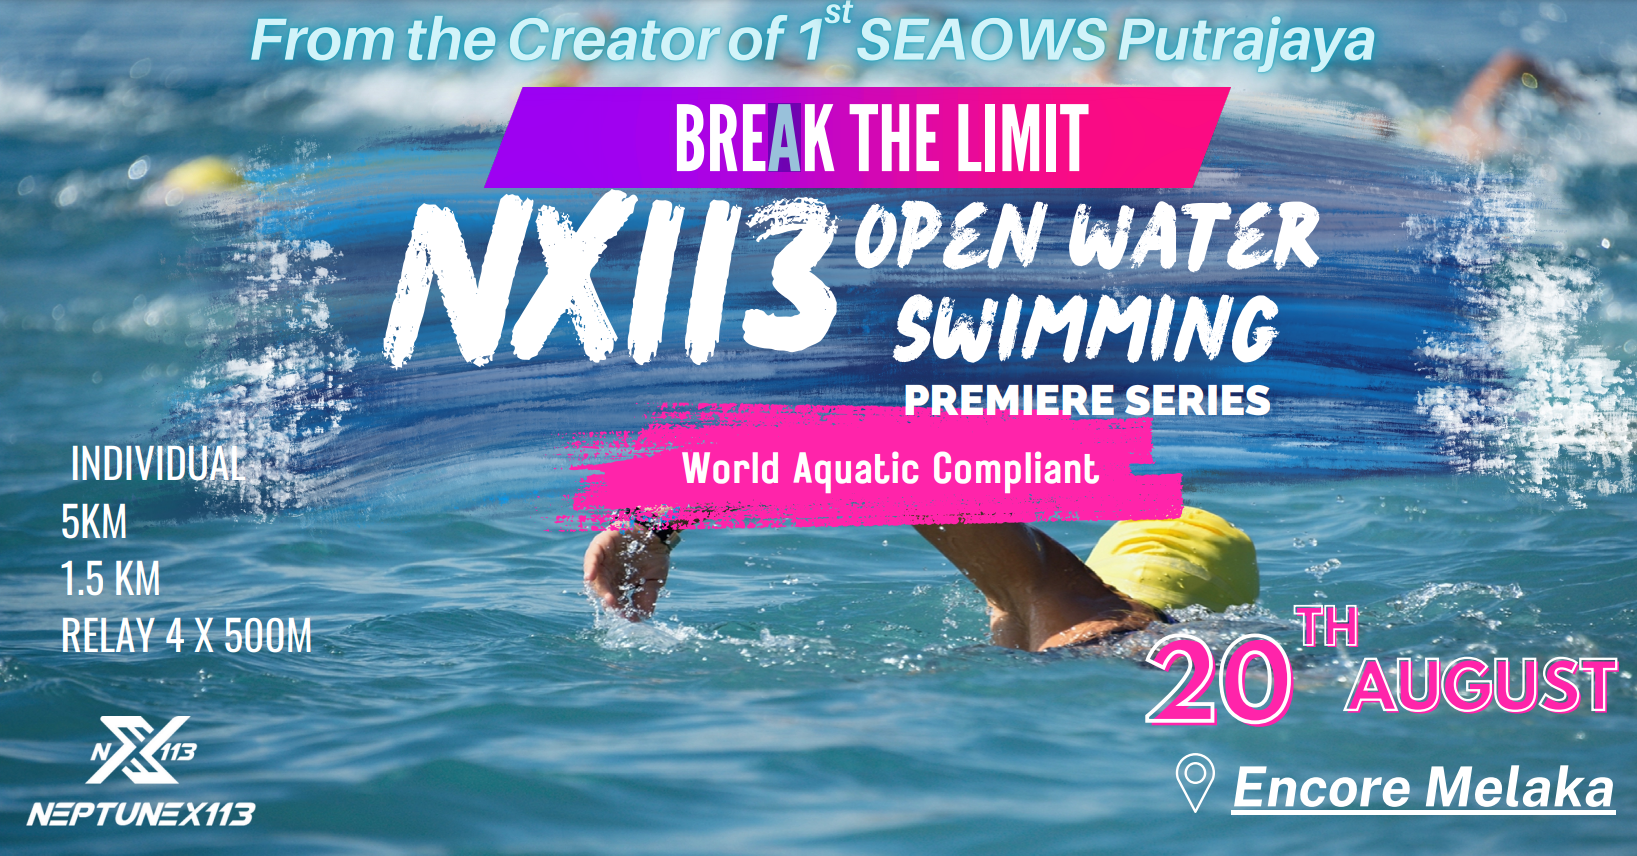 NX113 OPEN WATER SWIMMING PREMIER SERIES - NeptuneX113